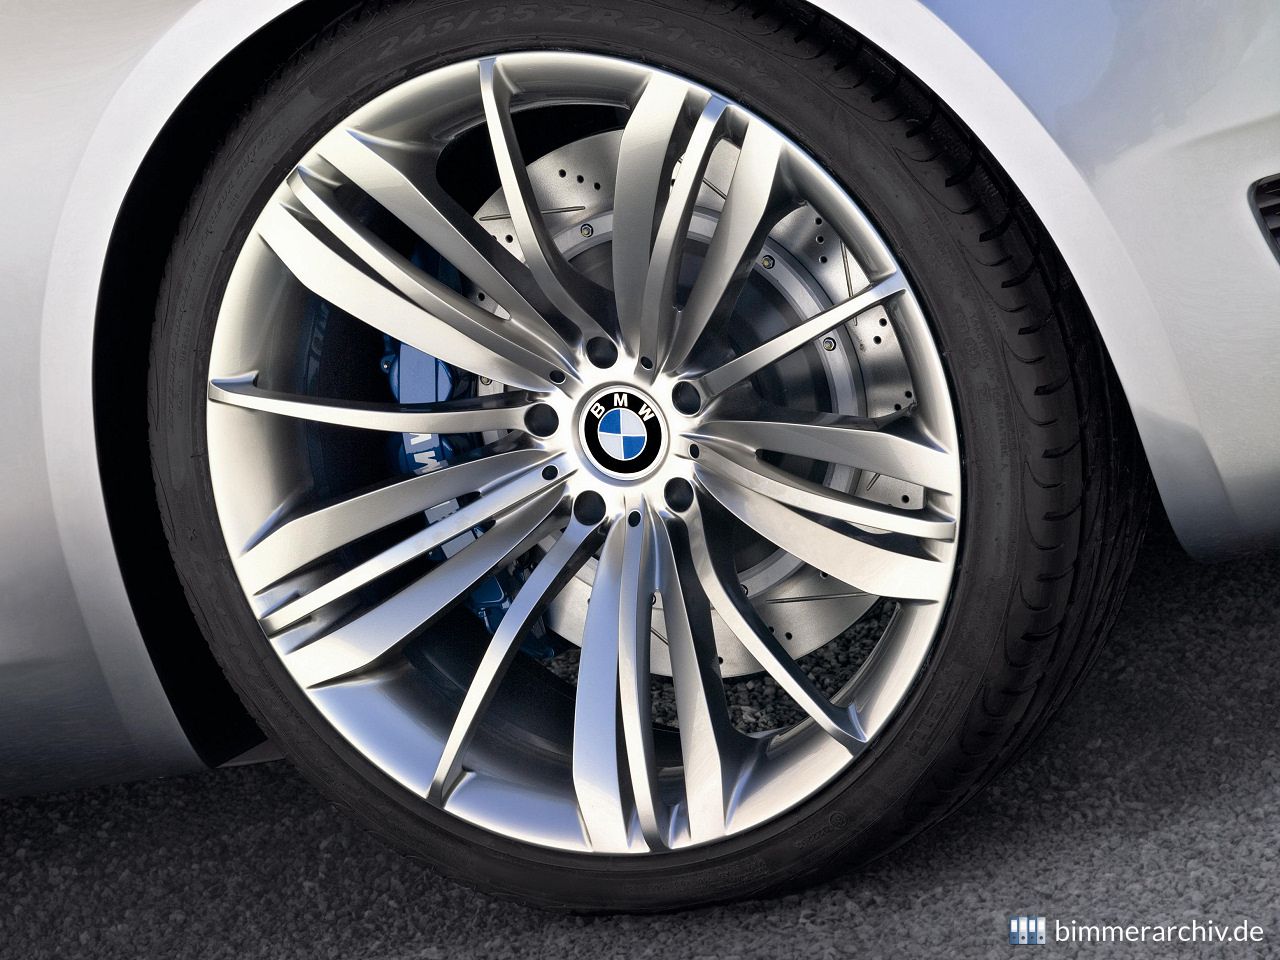 BMW Concept CS - 21 Zoll-Leichtmetallräder